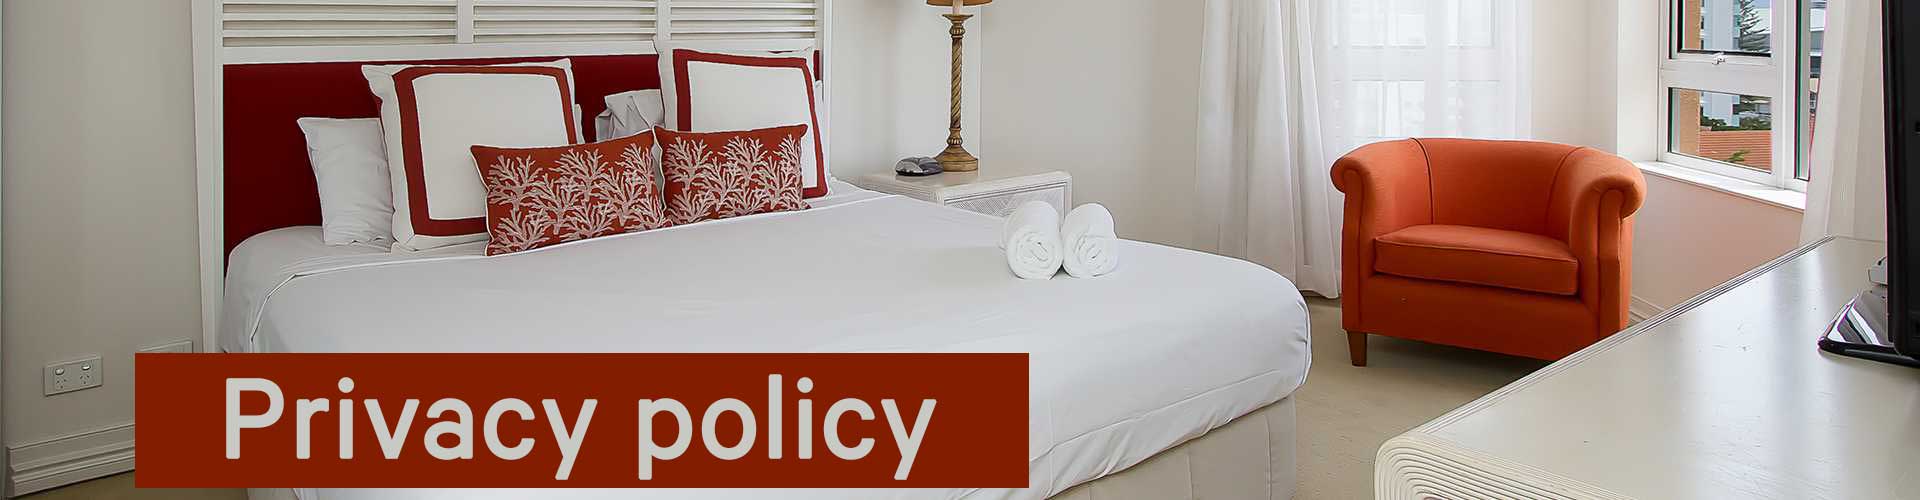 Buy mattress privacy policies- springtek